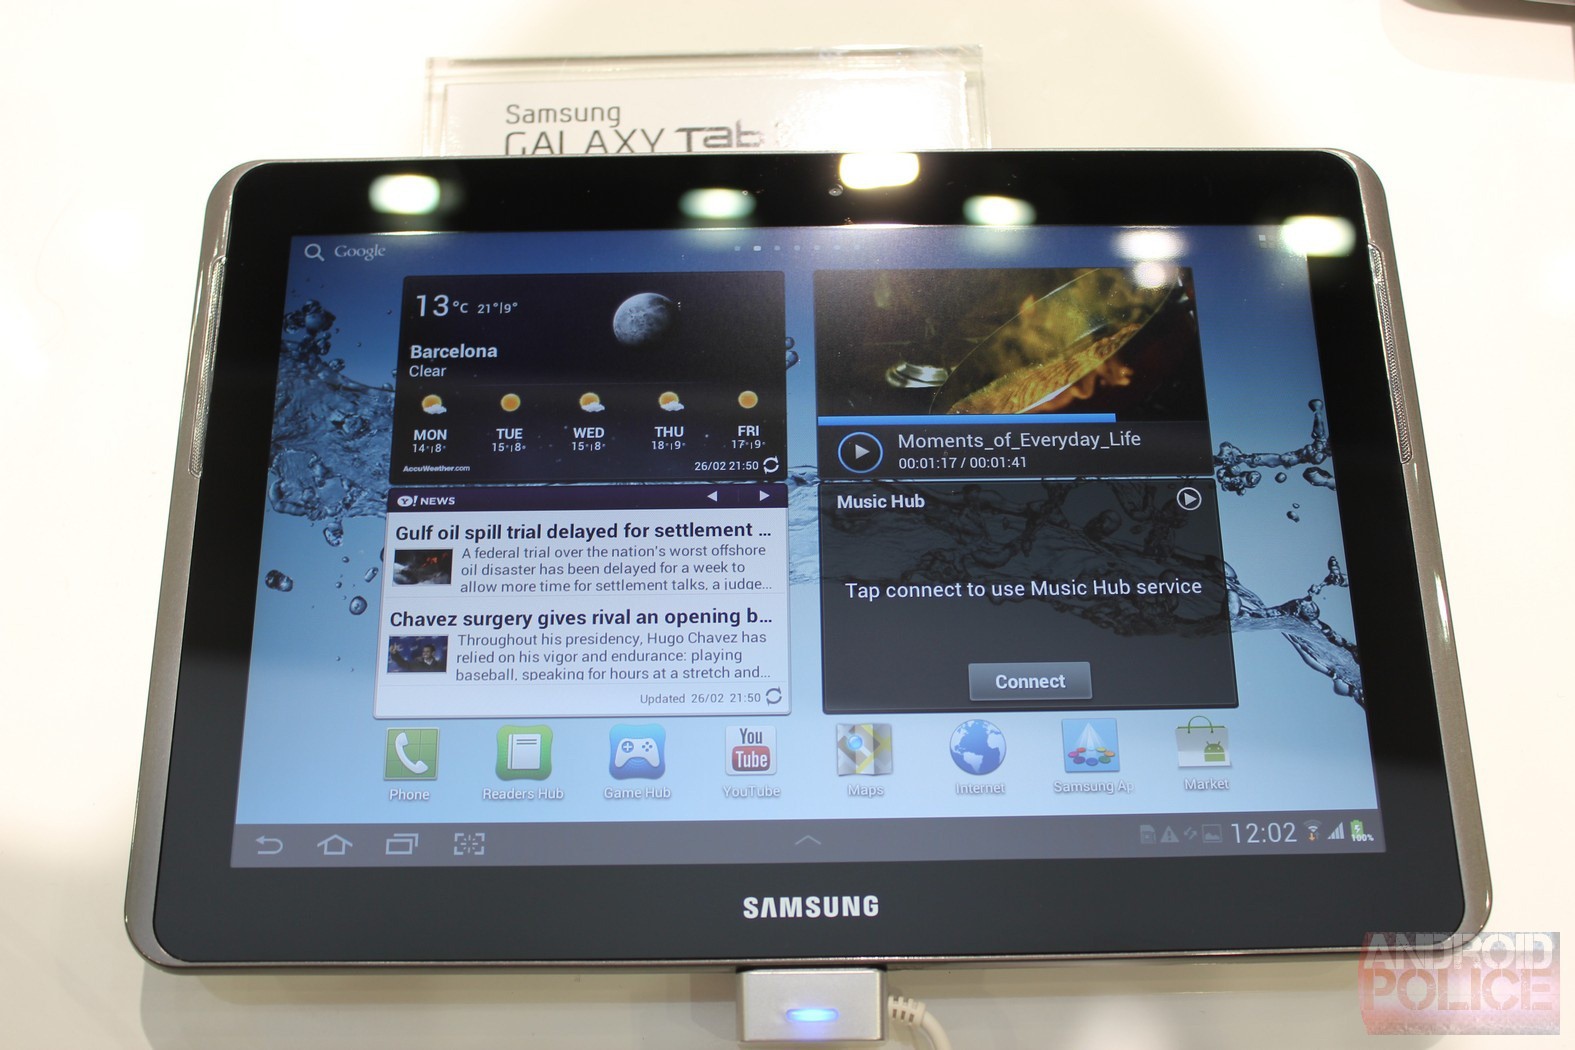 Планшет Samsung Galaxy Tab 2 10.1 на базе Android 4.0 представлен официально